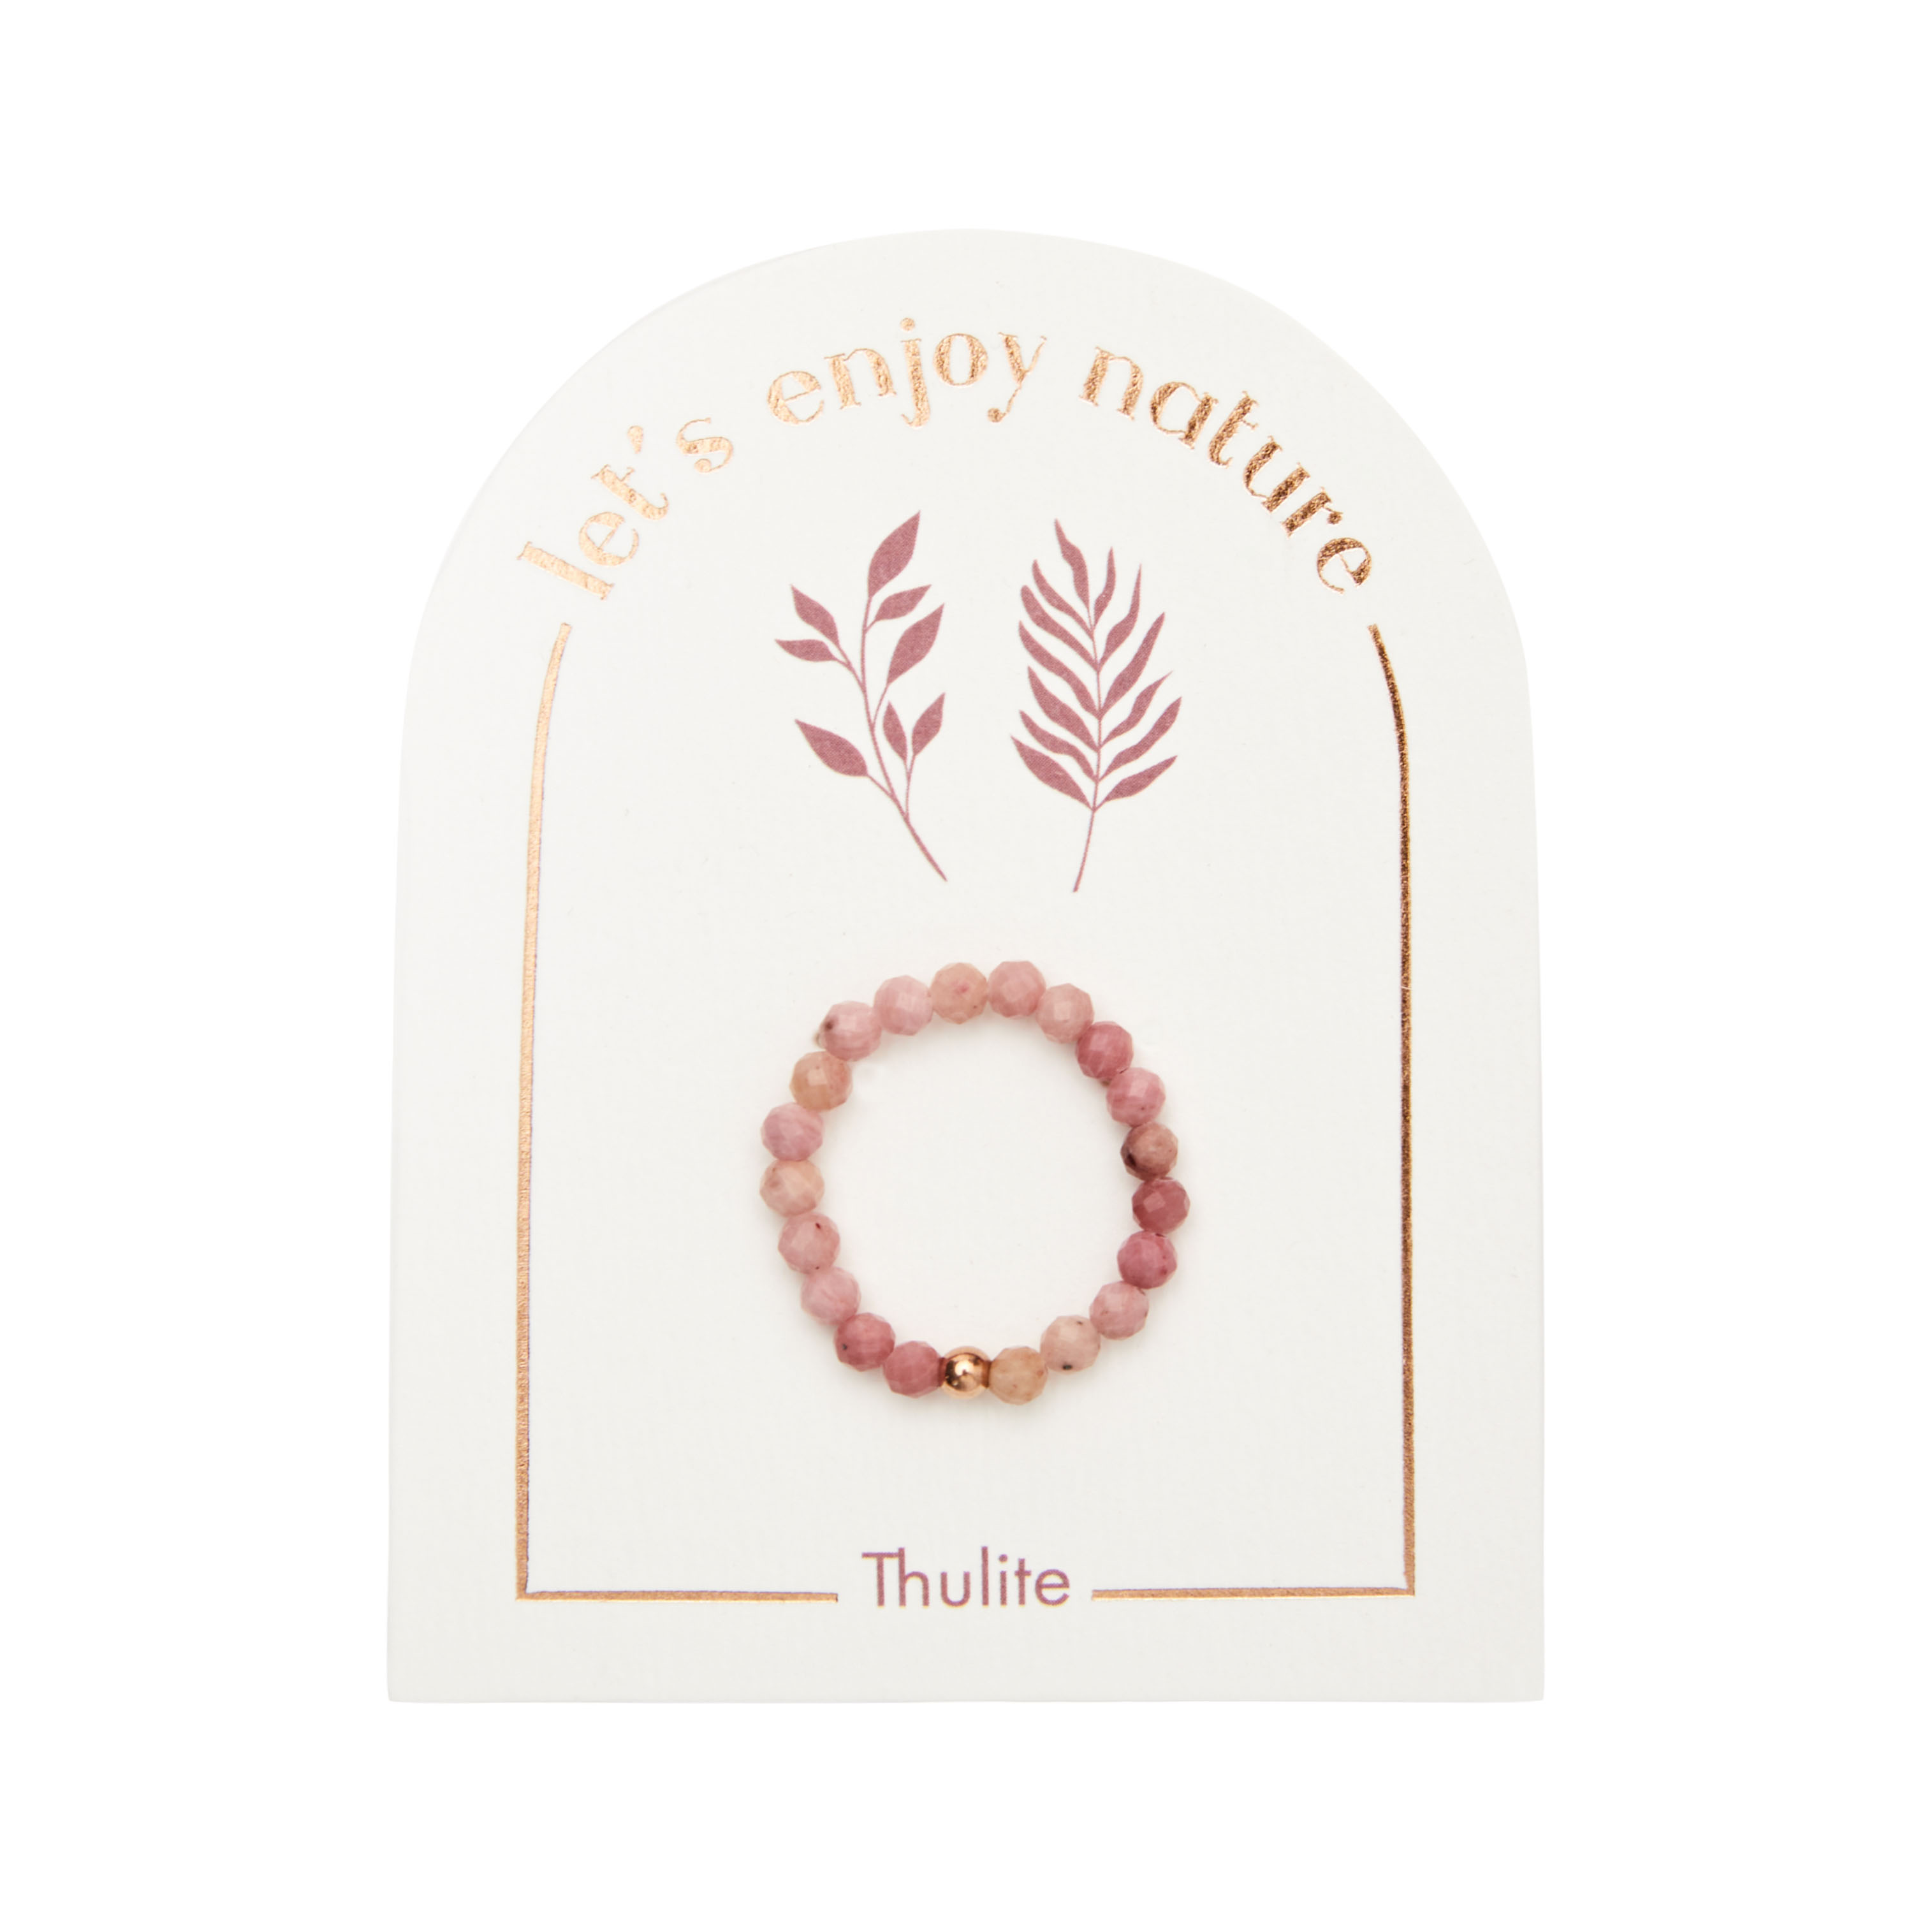 Ring - "let's enjoy nature" - Thulit - rosévergoldet 